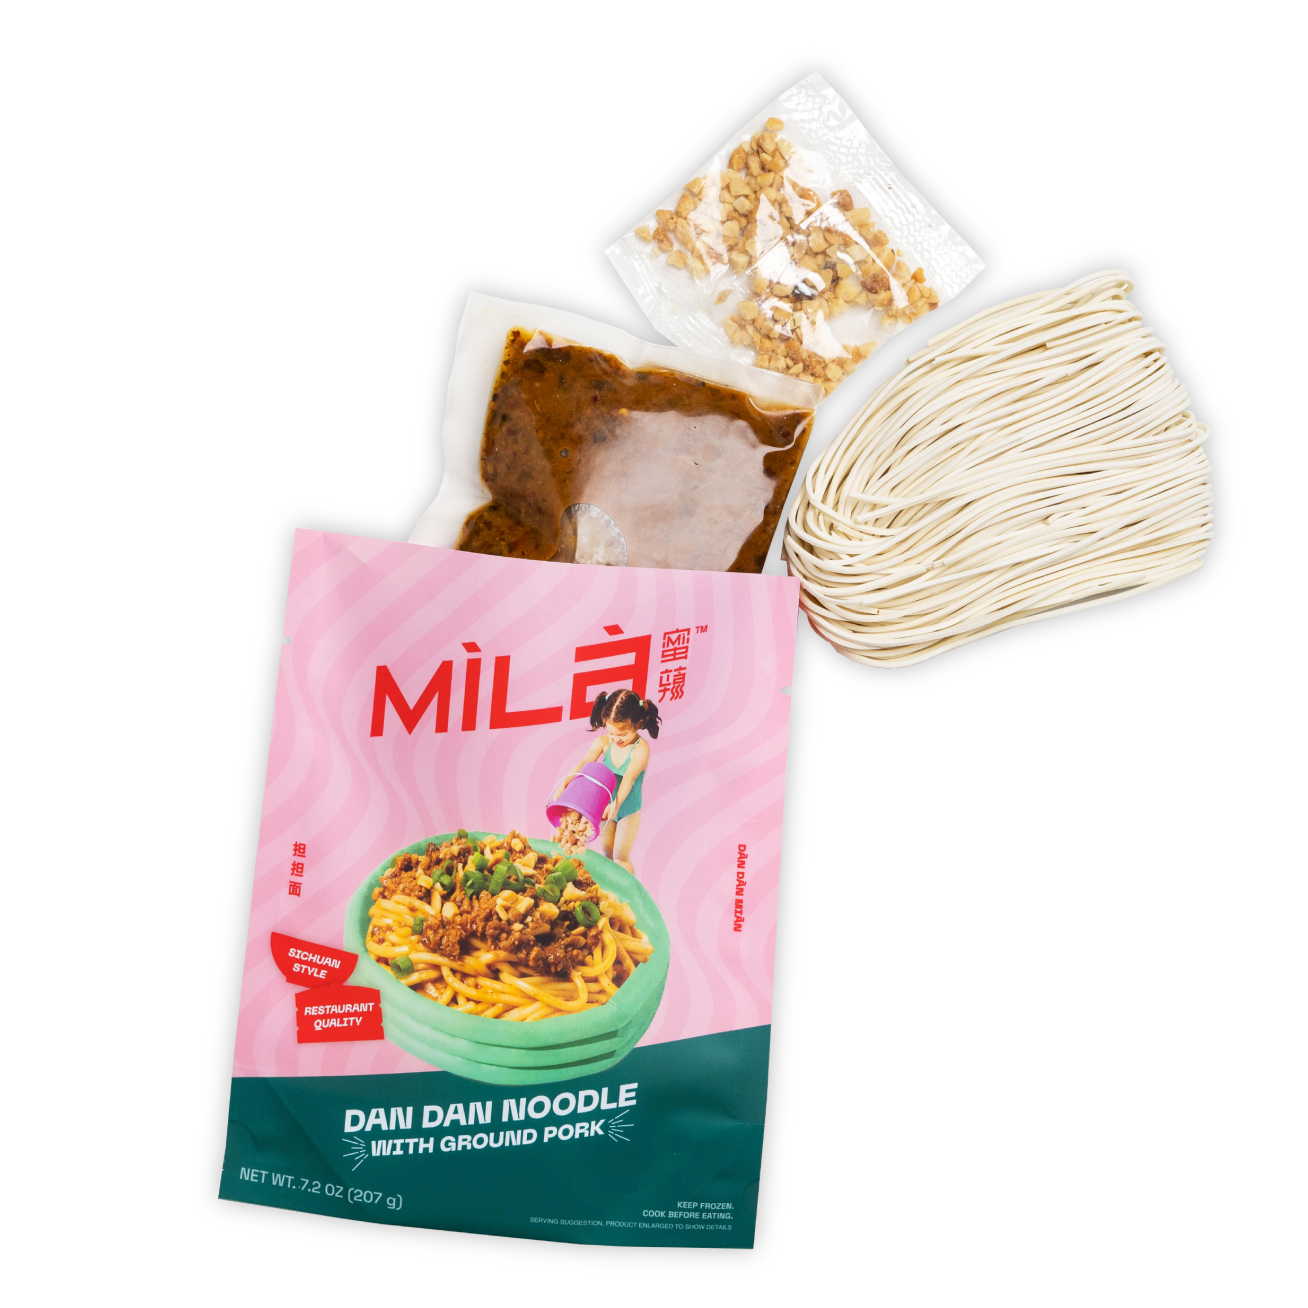 Sichuan Dan Dan Noodle / Ground Pork